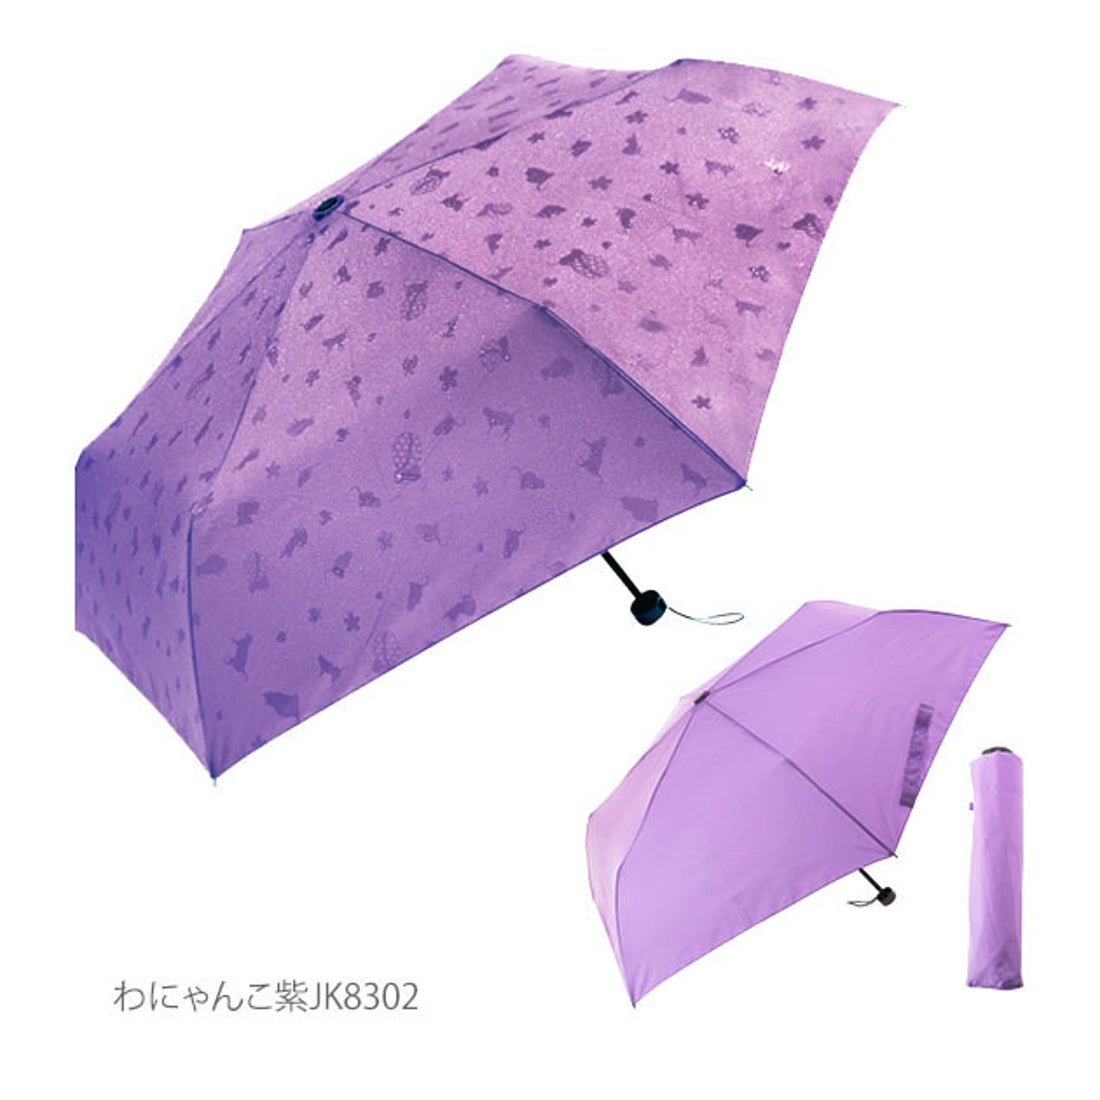 Backyard Family ノーブランド No Brand サントス Santos Jk 折りたたみ傘 わにゃんこ わにゃんこ紫jk02 ファッション通販 Fashion Walker